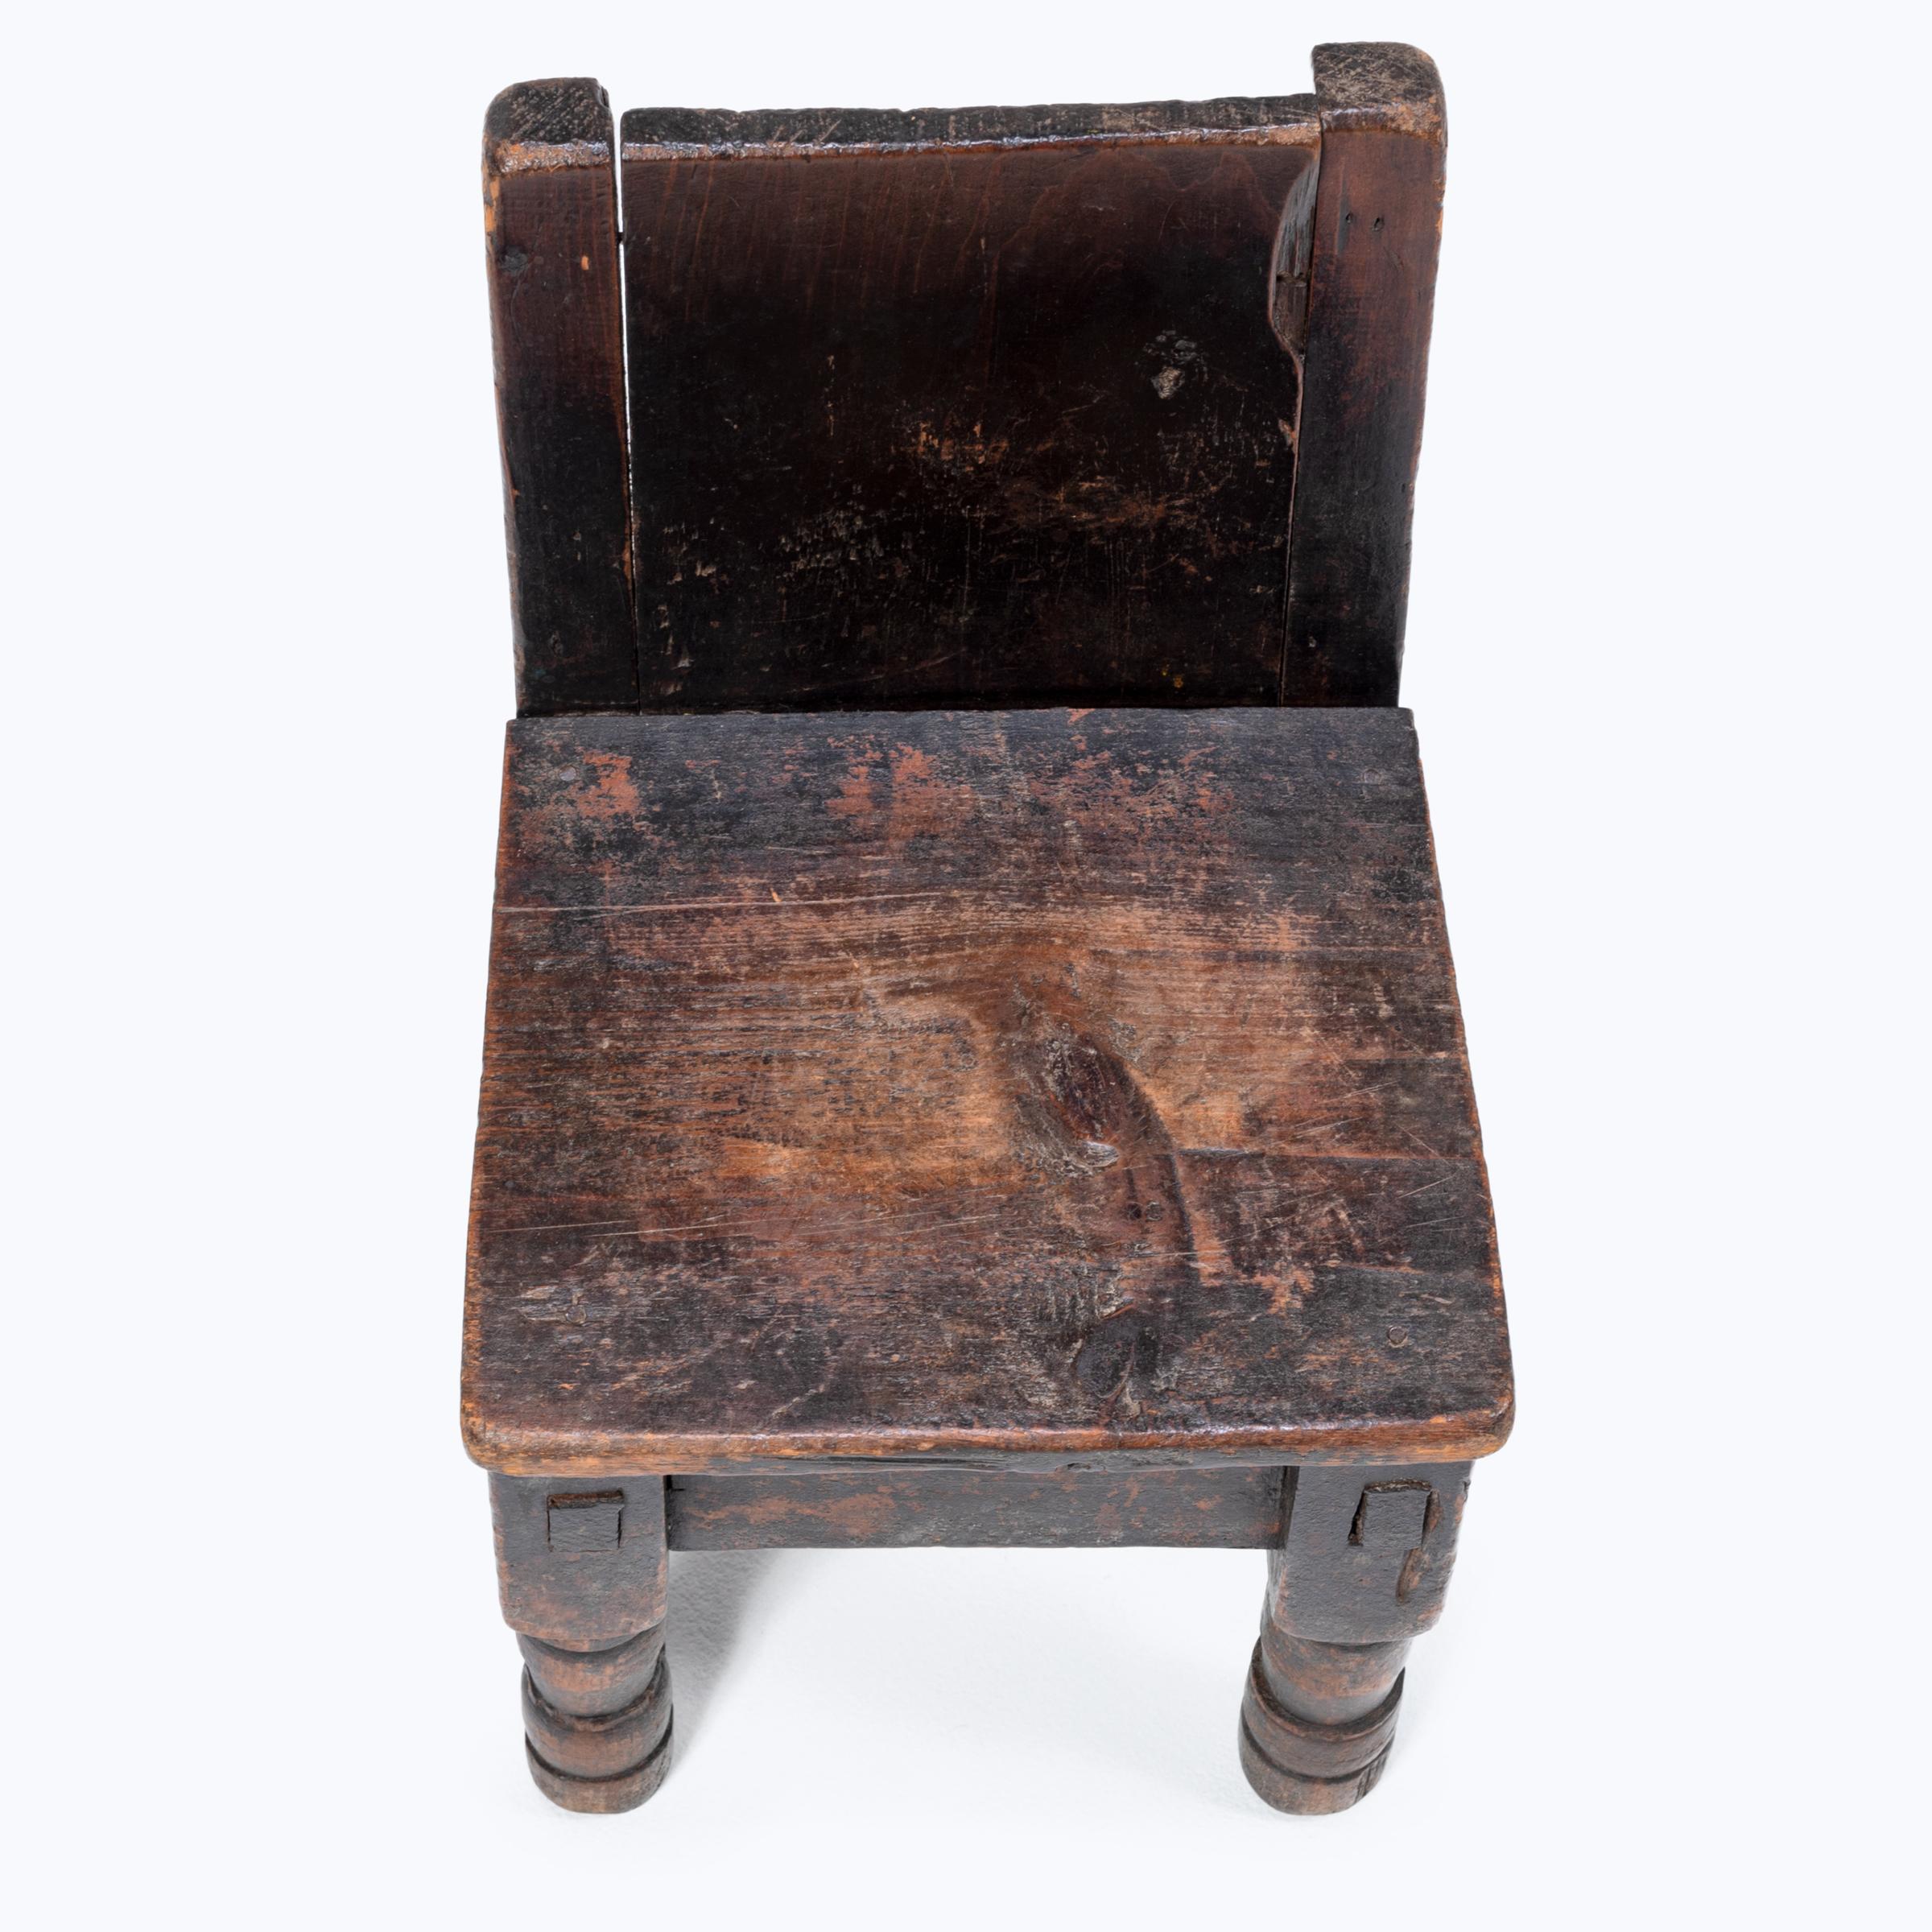 20th Century Guatemalan Child's Chair, circa 1900